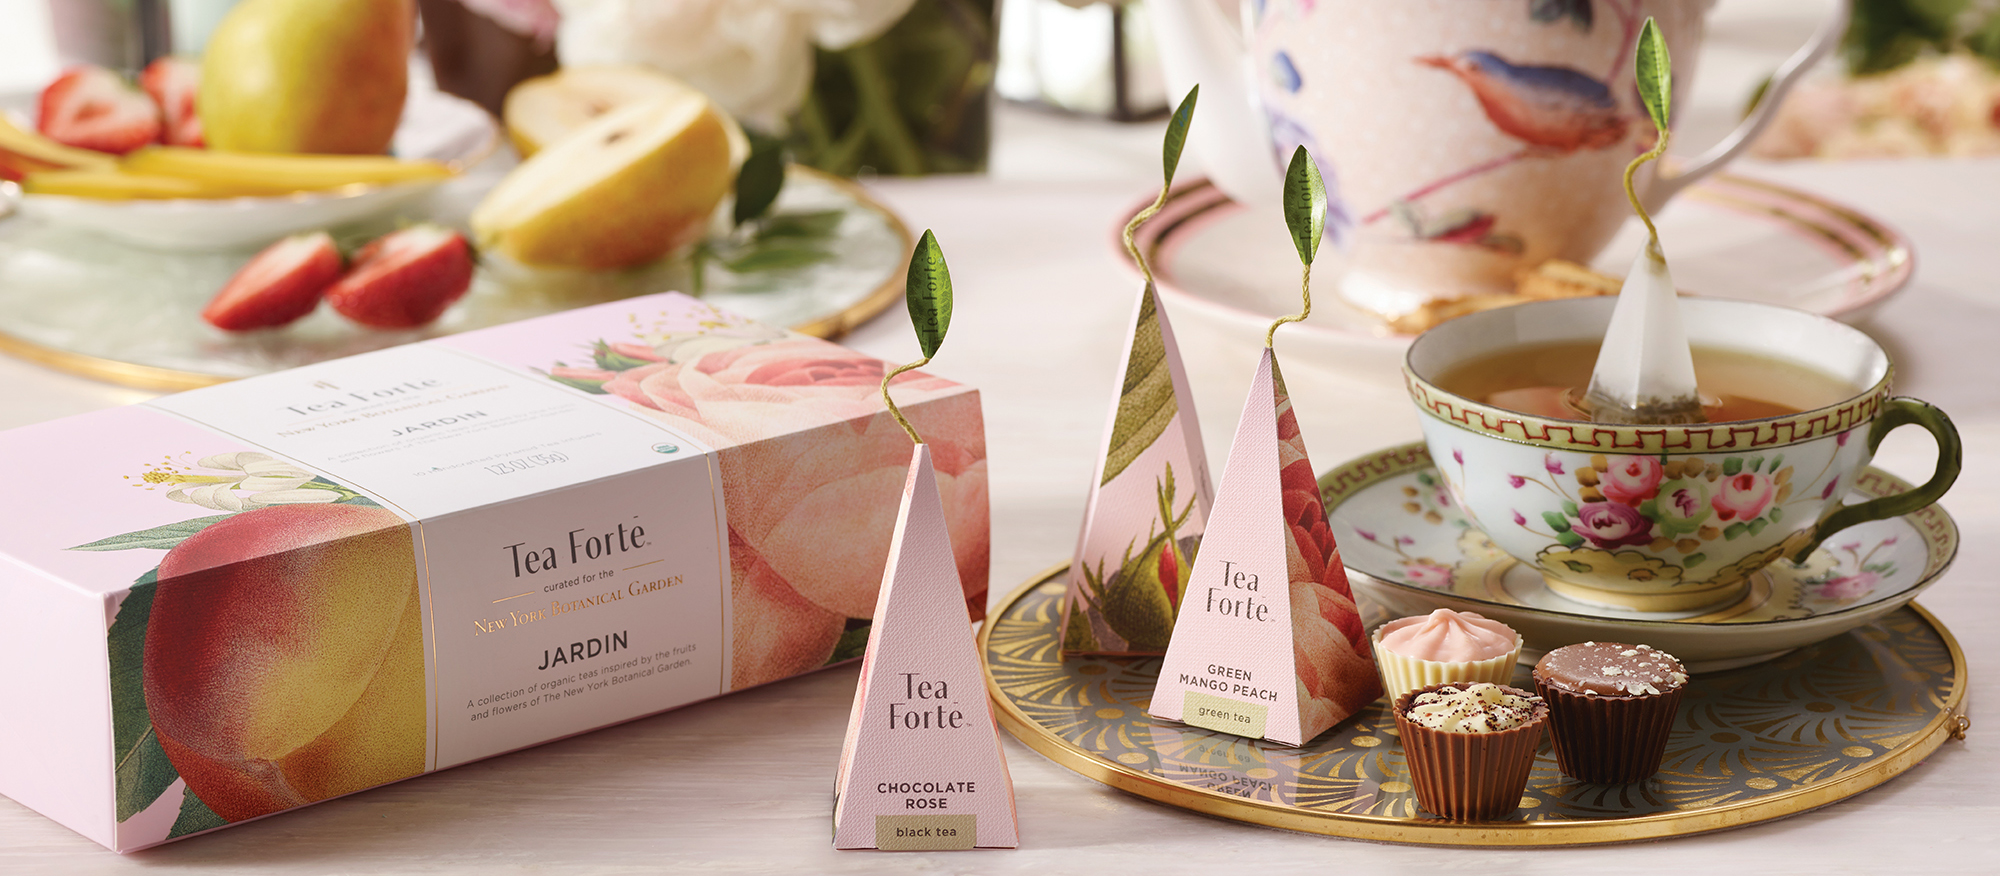 NYBG & Tea Forté Jardin - Jewel Branding